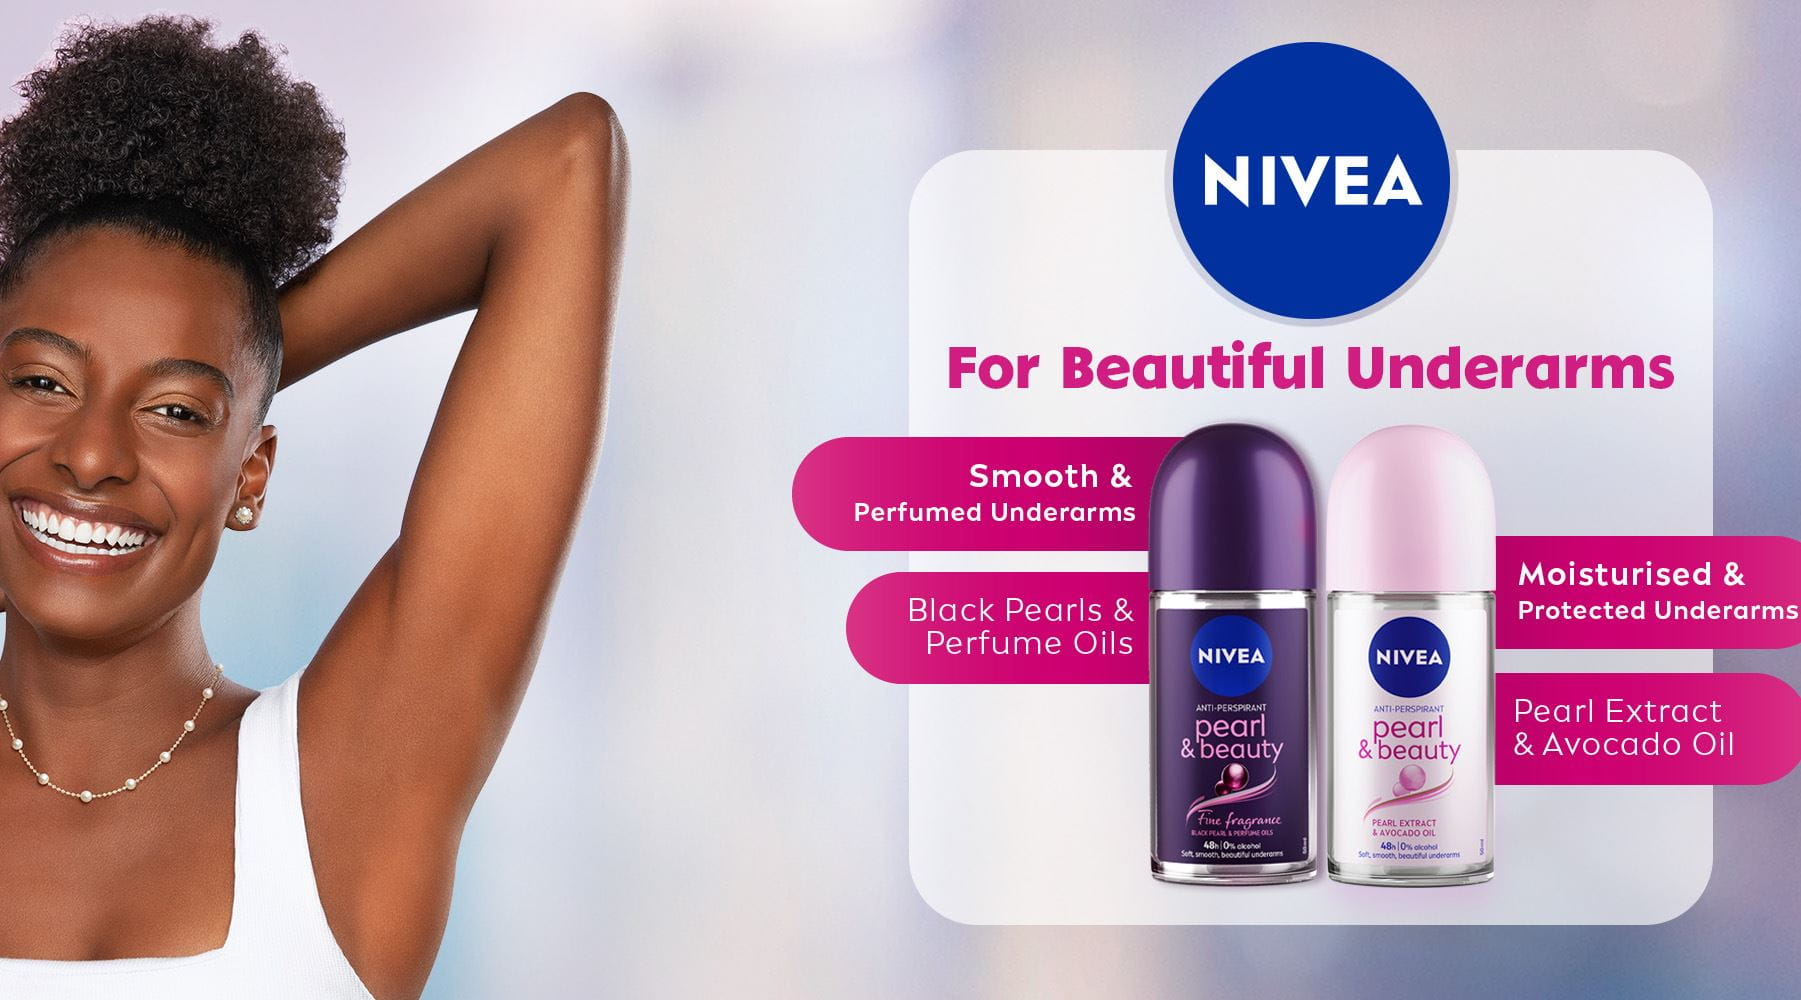 NIVEA Pearl & Beauty Deodorant Range